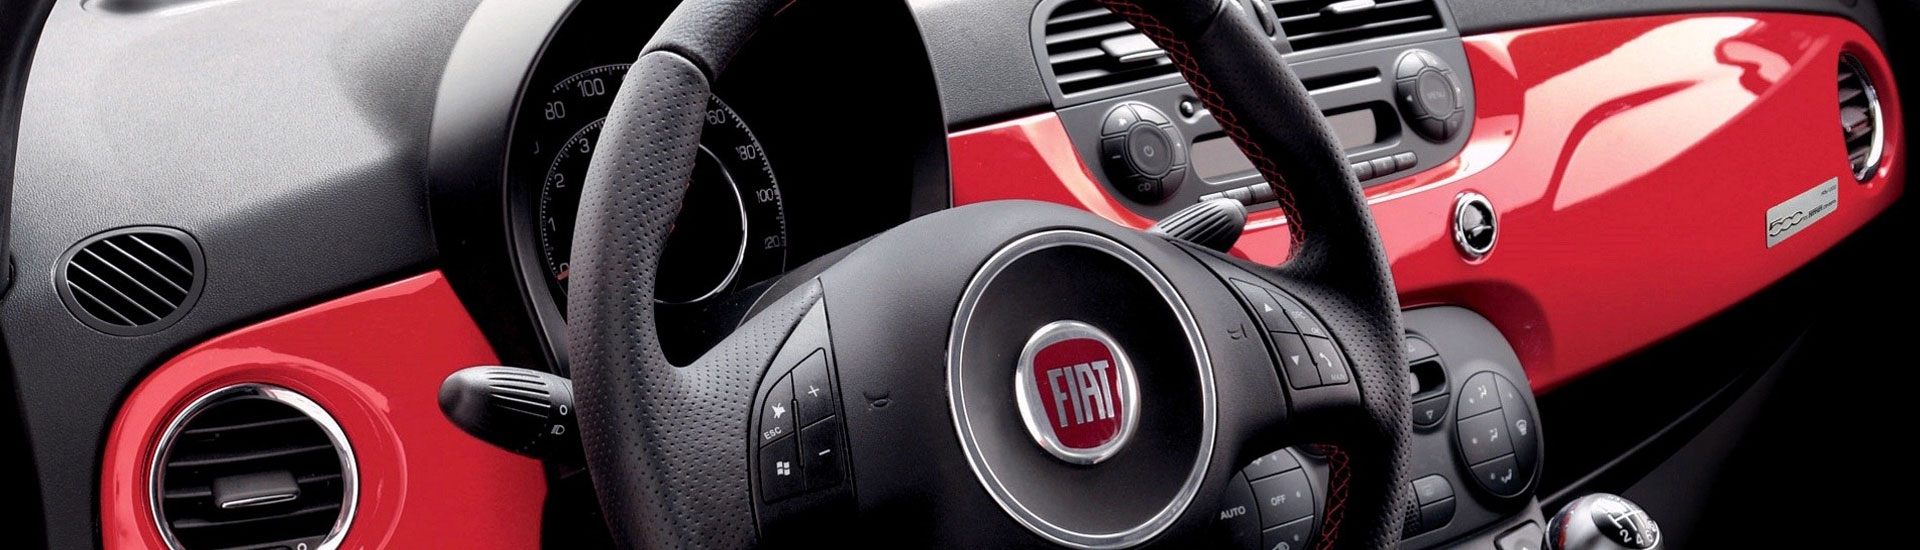 2019 Fiat 500 Abarth Custom Dash Kits